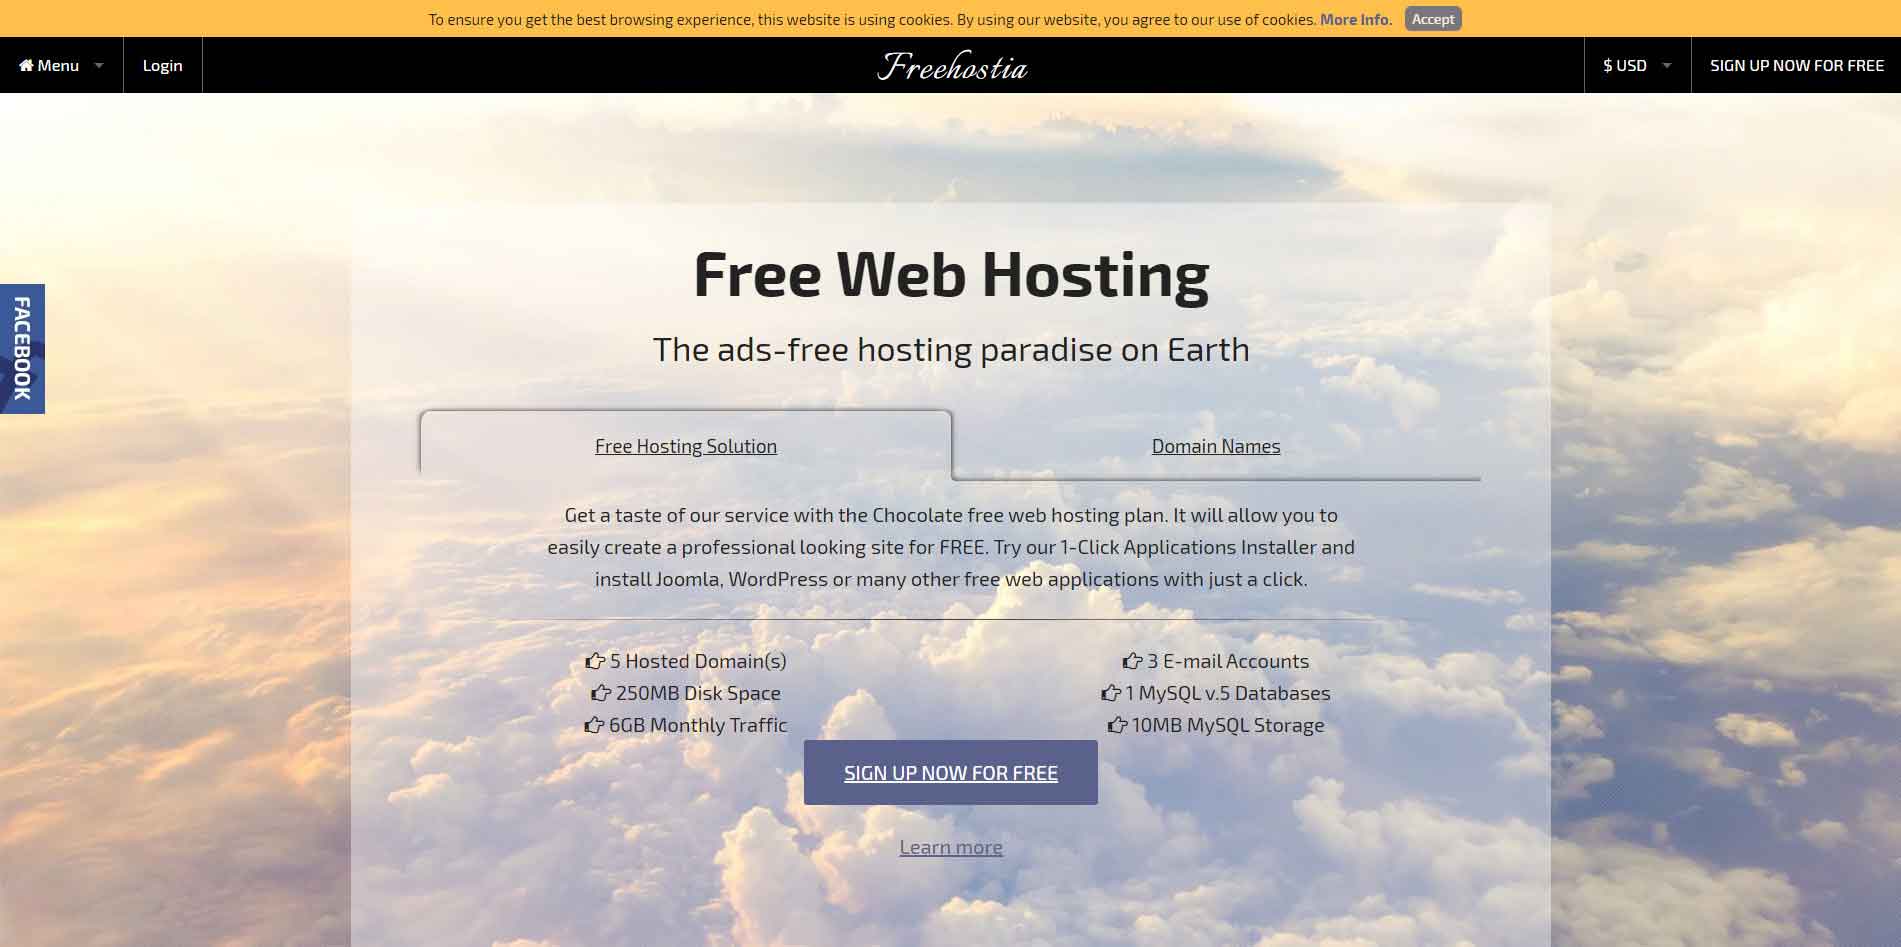 8+ Best Free Website Hosting Services Provider in 2022